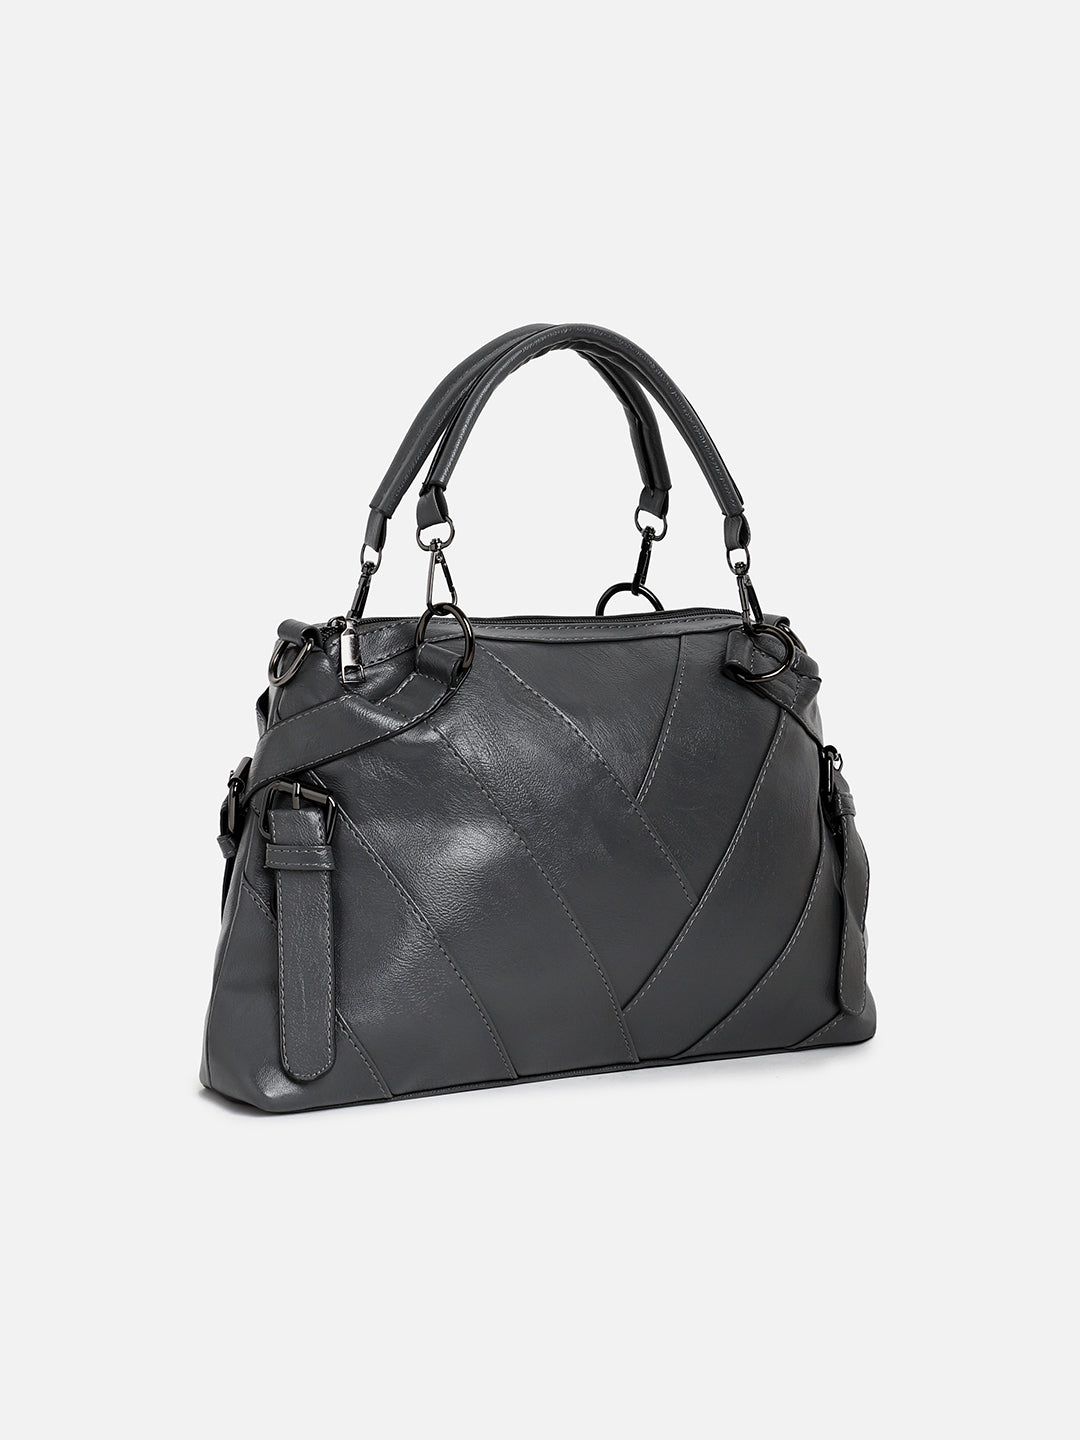 Liz Black Handbag